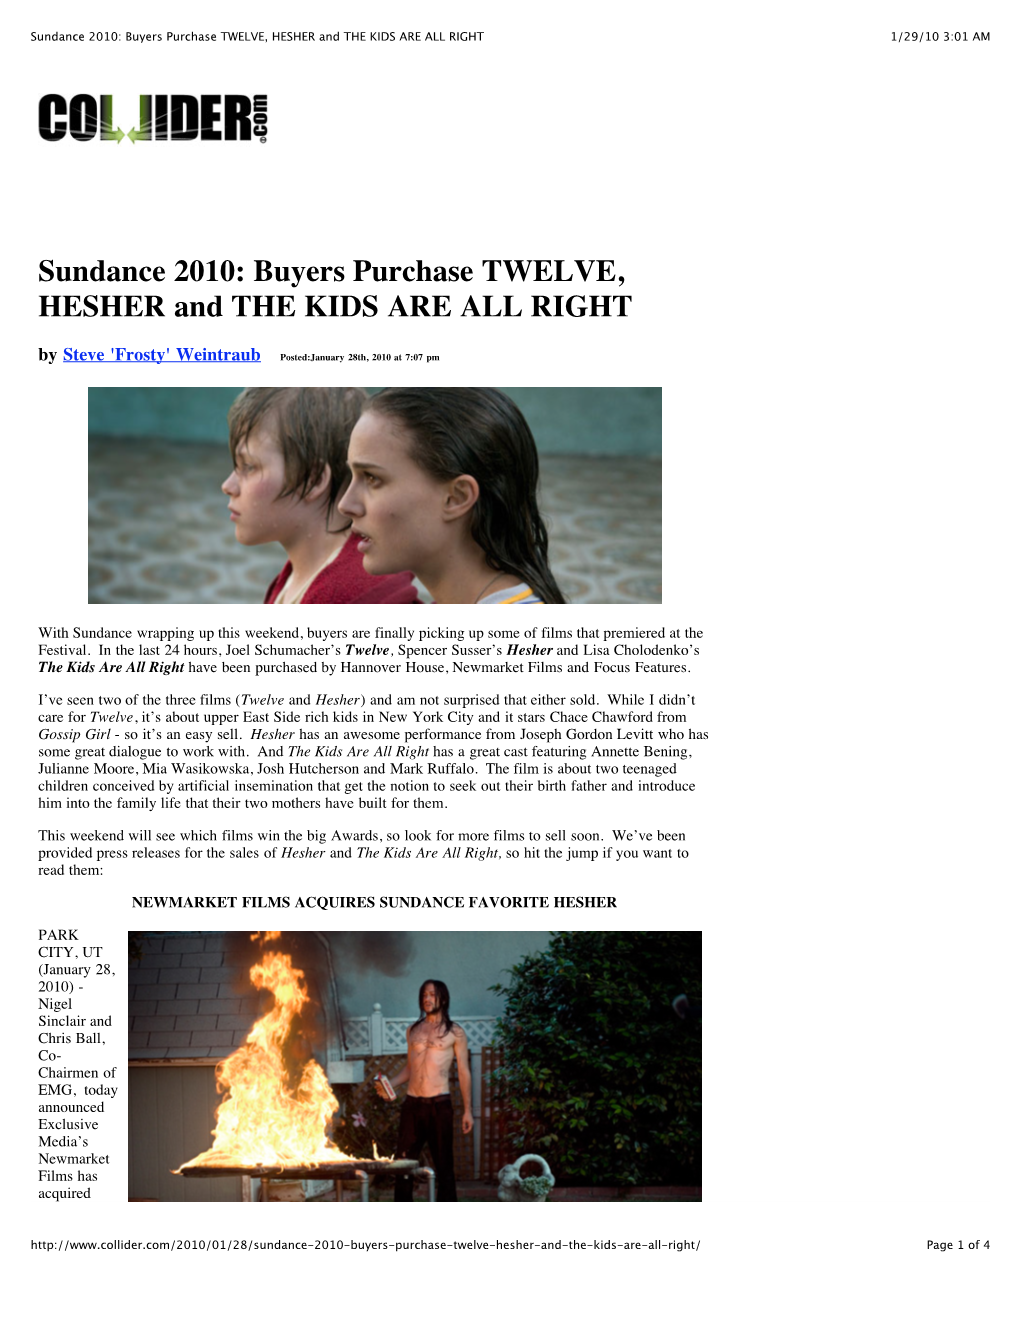 Sundance 2010 Buyers Purchase TWELVE, HESHER and the KIDS